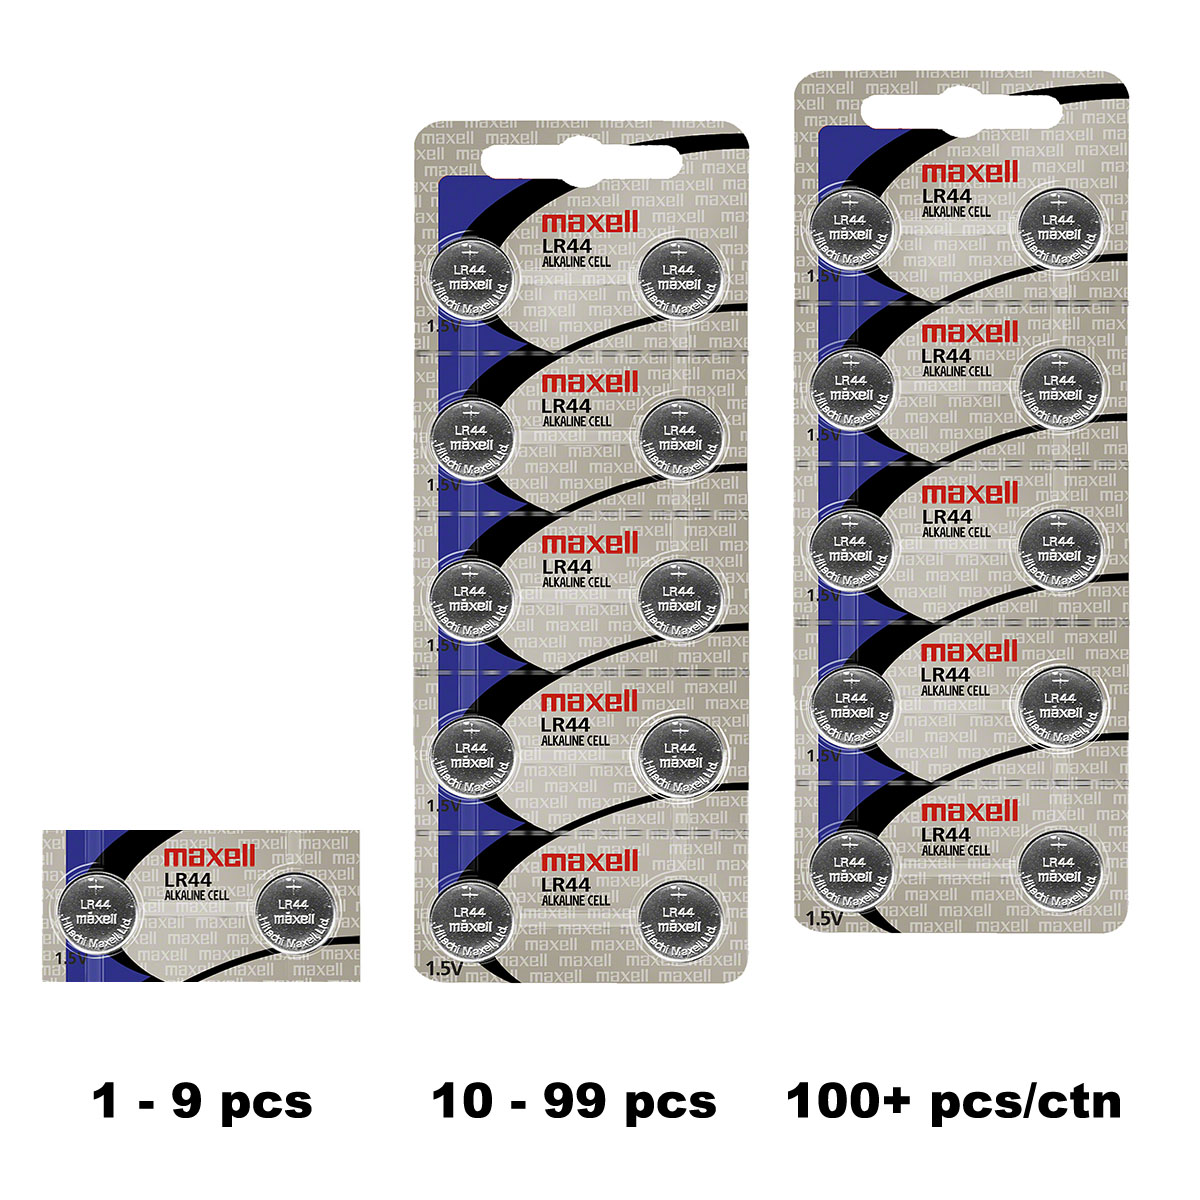 Murata CR1216 3V Lithium Battery 500 Pcs Single Use Batteries Wholesale Pack